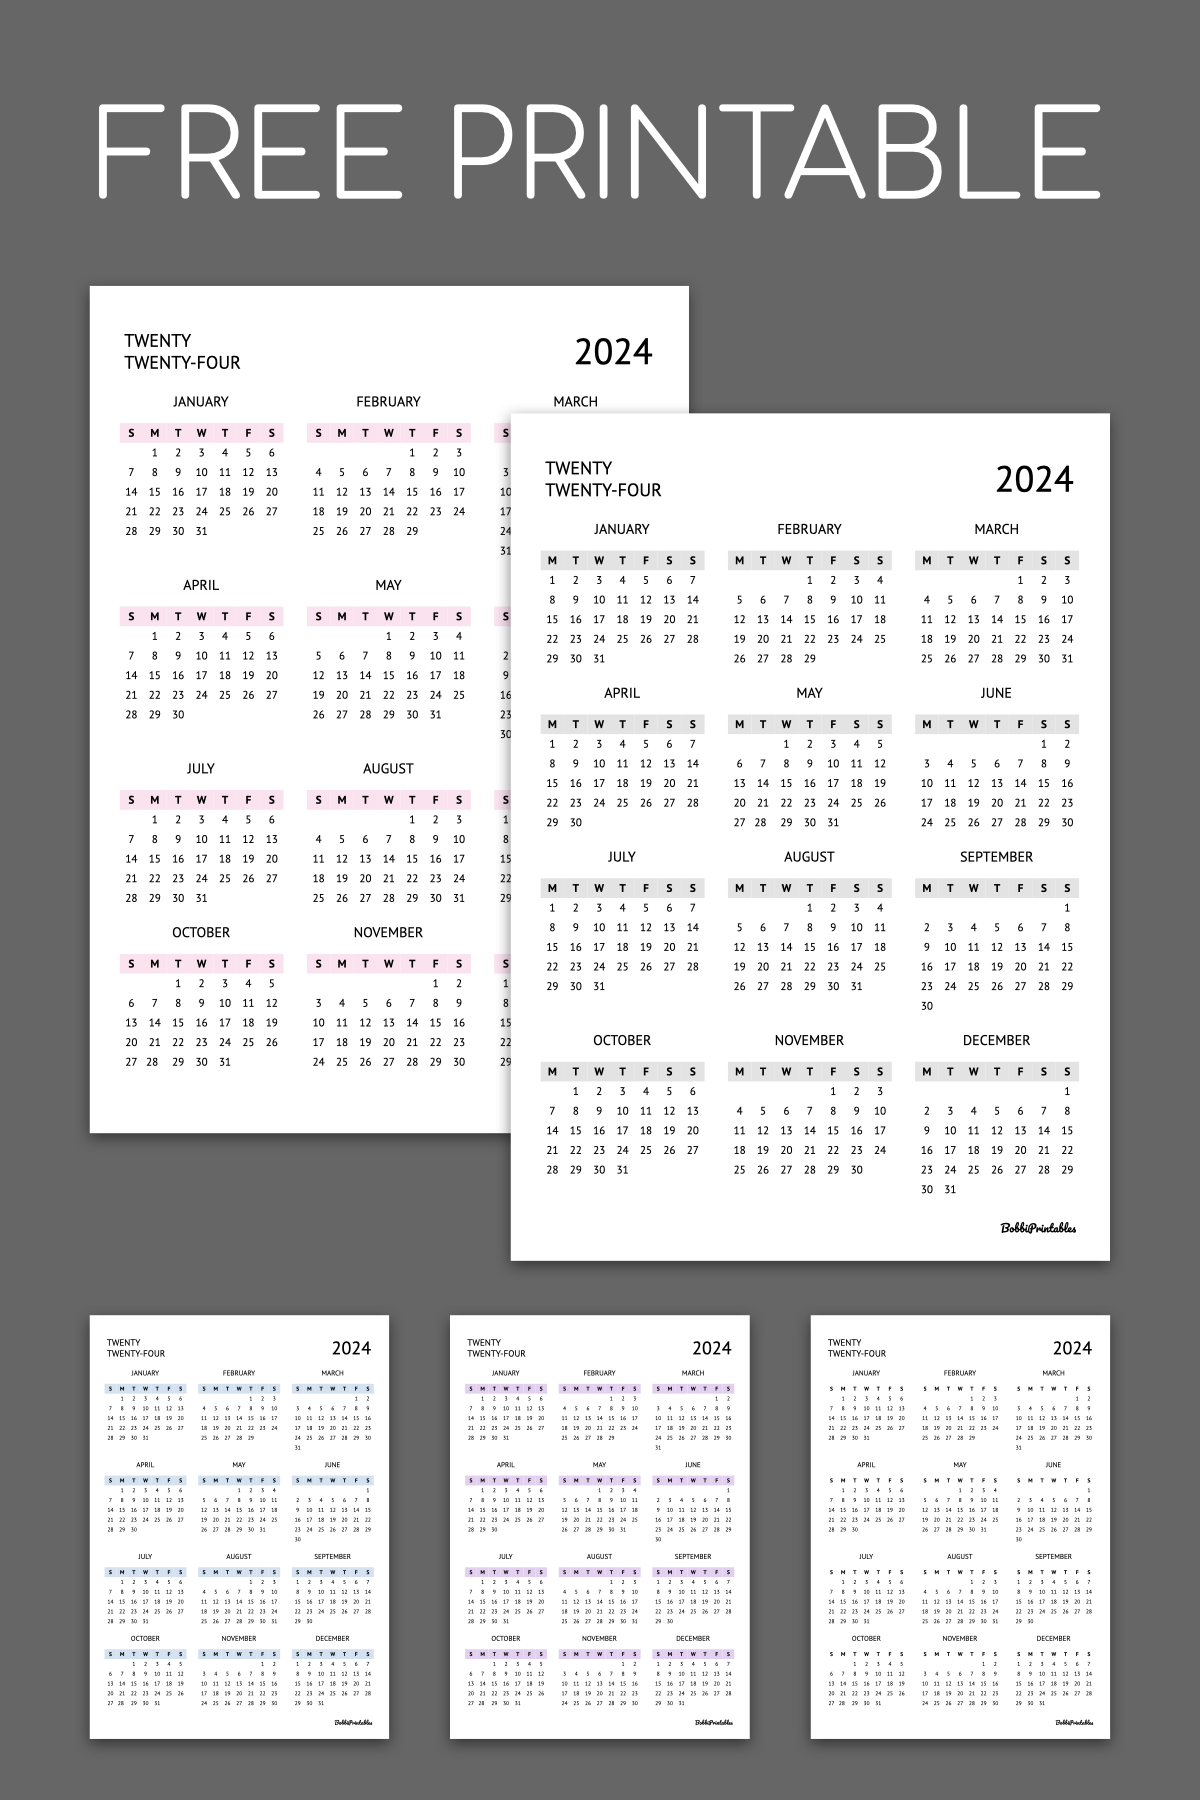 2024 Year-At-A-Glance Calendar - Free Printable Digital Insert for Free Printable Calendar 2024 Without Downloading